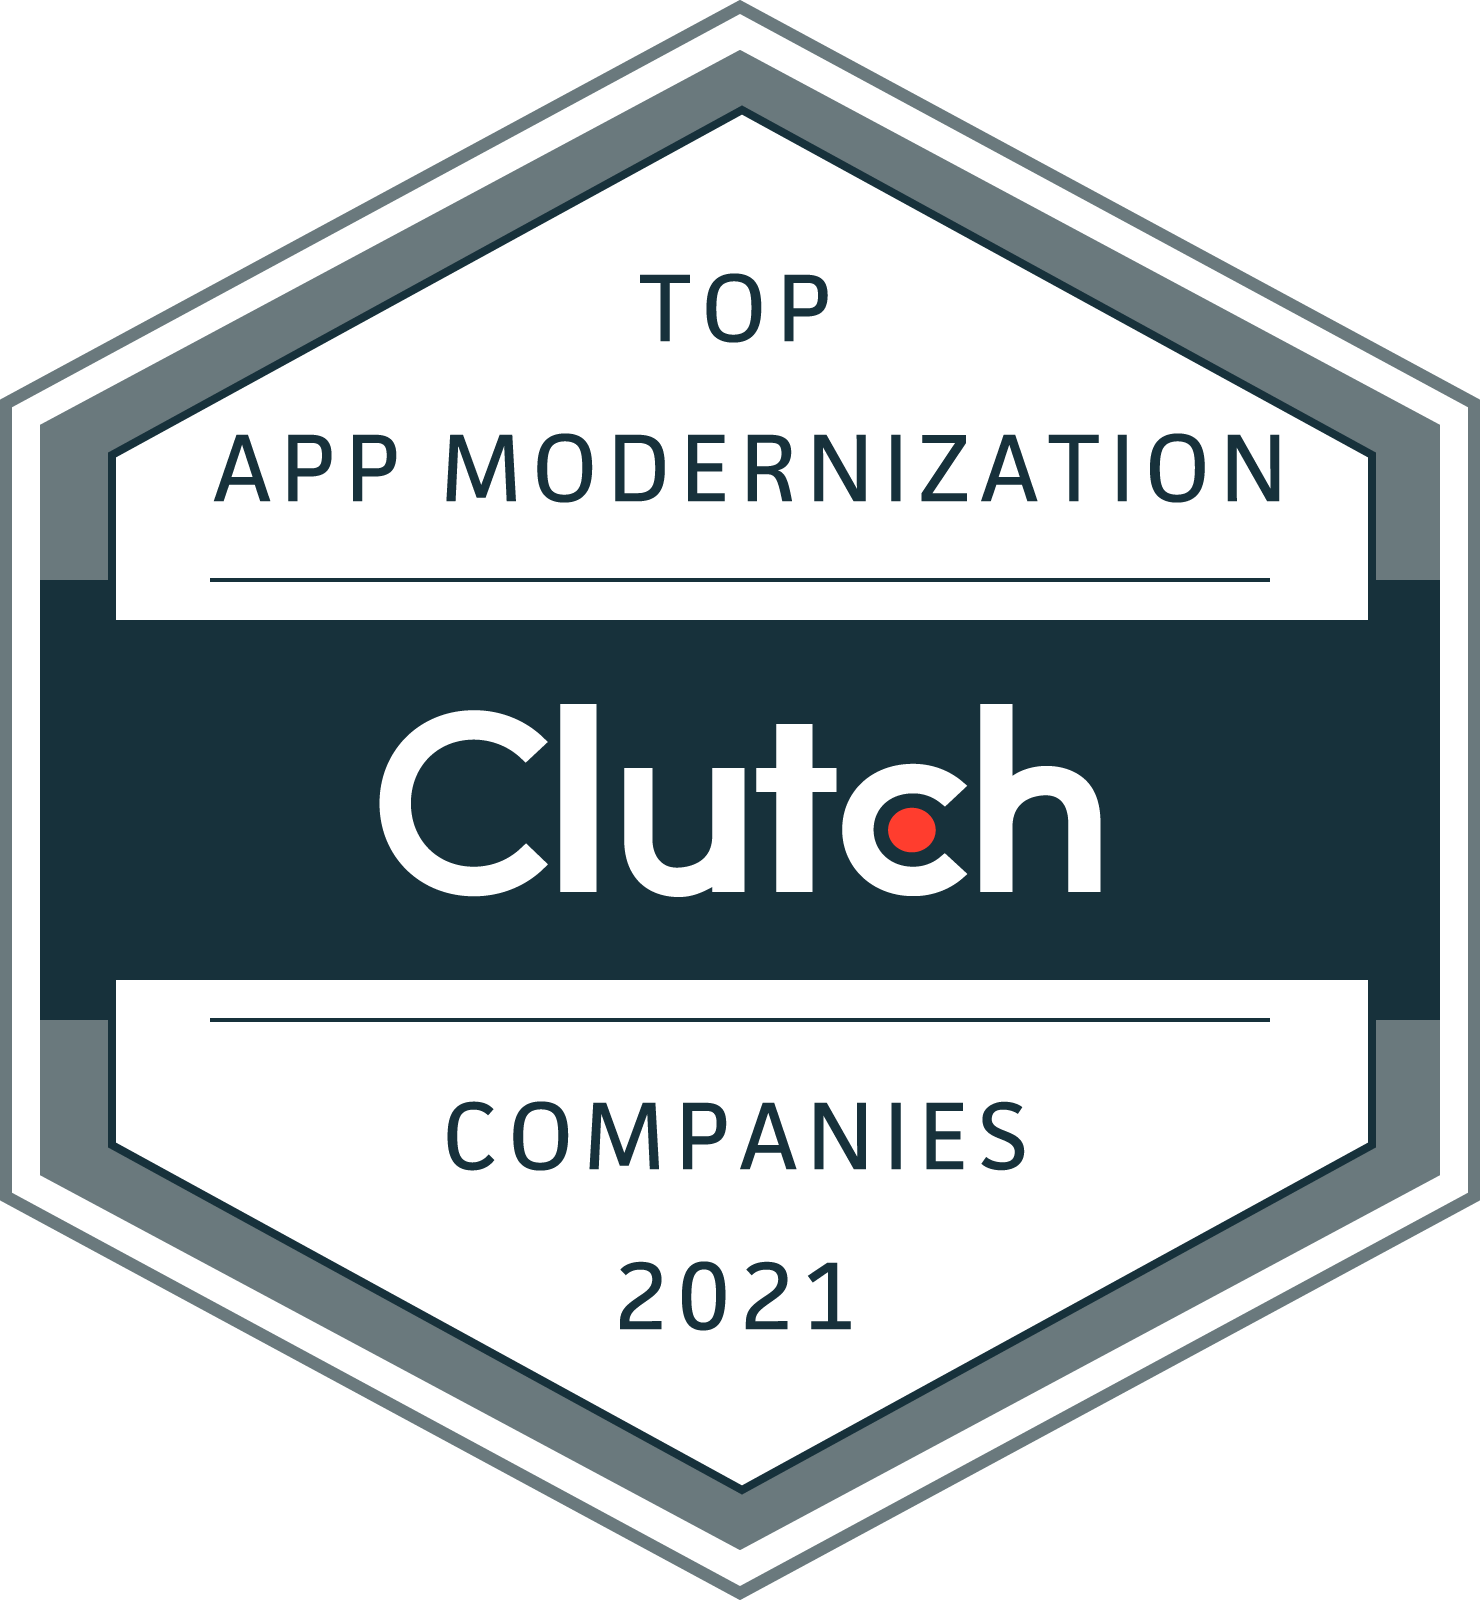 Top App Modernization Company by AppFutura